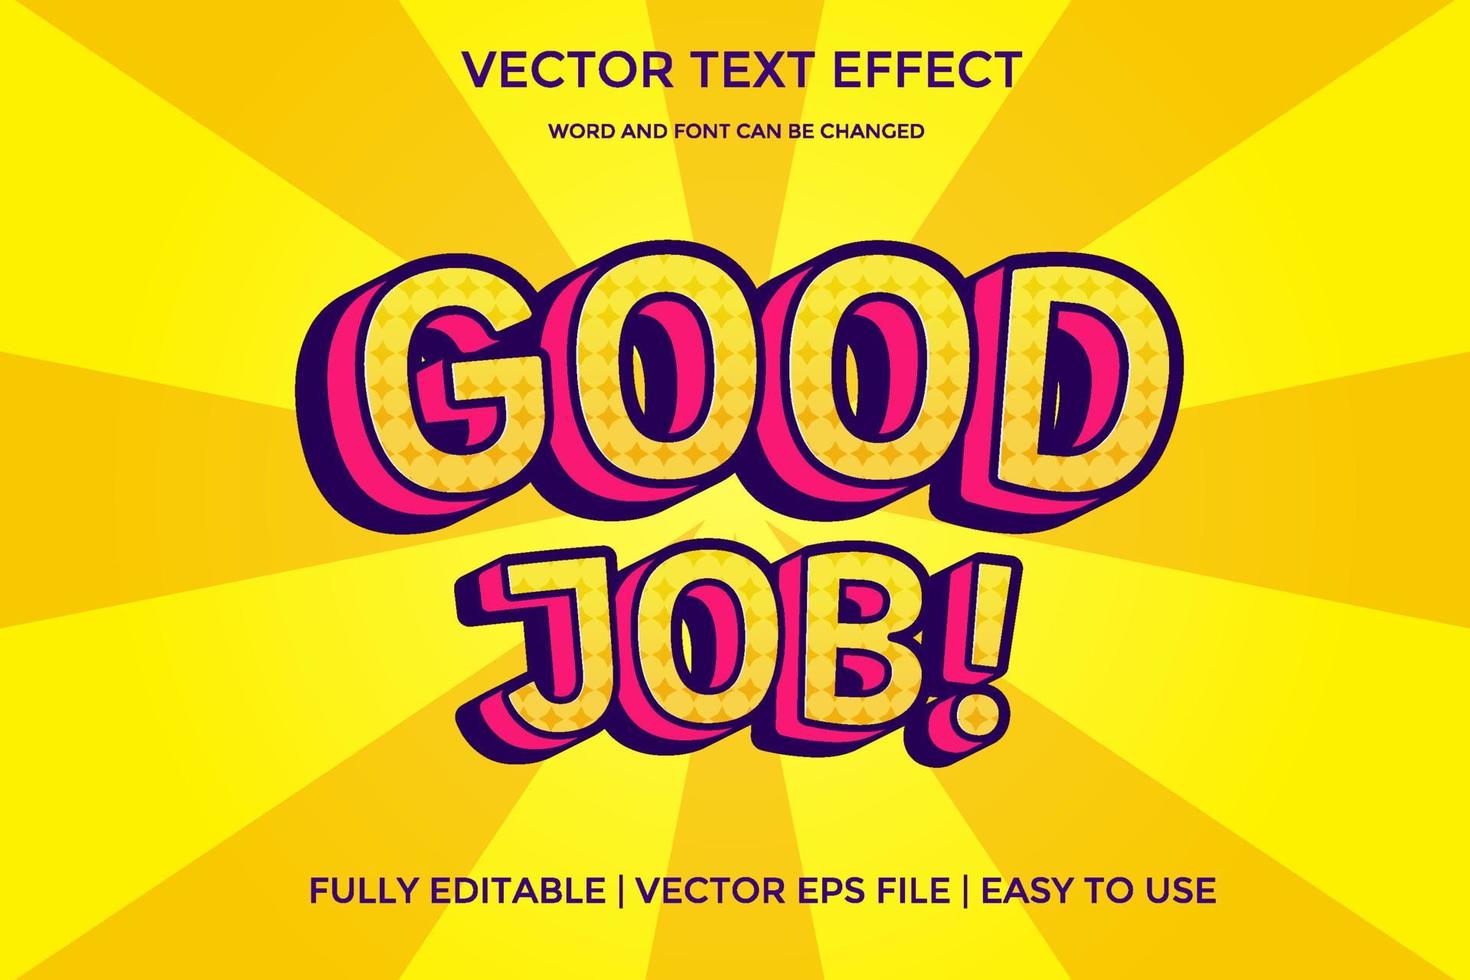 bra jobb tecknad vektor texteffekt redigerbar